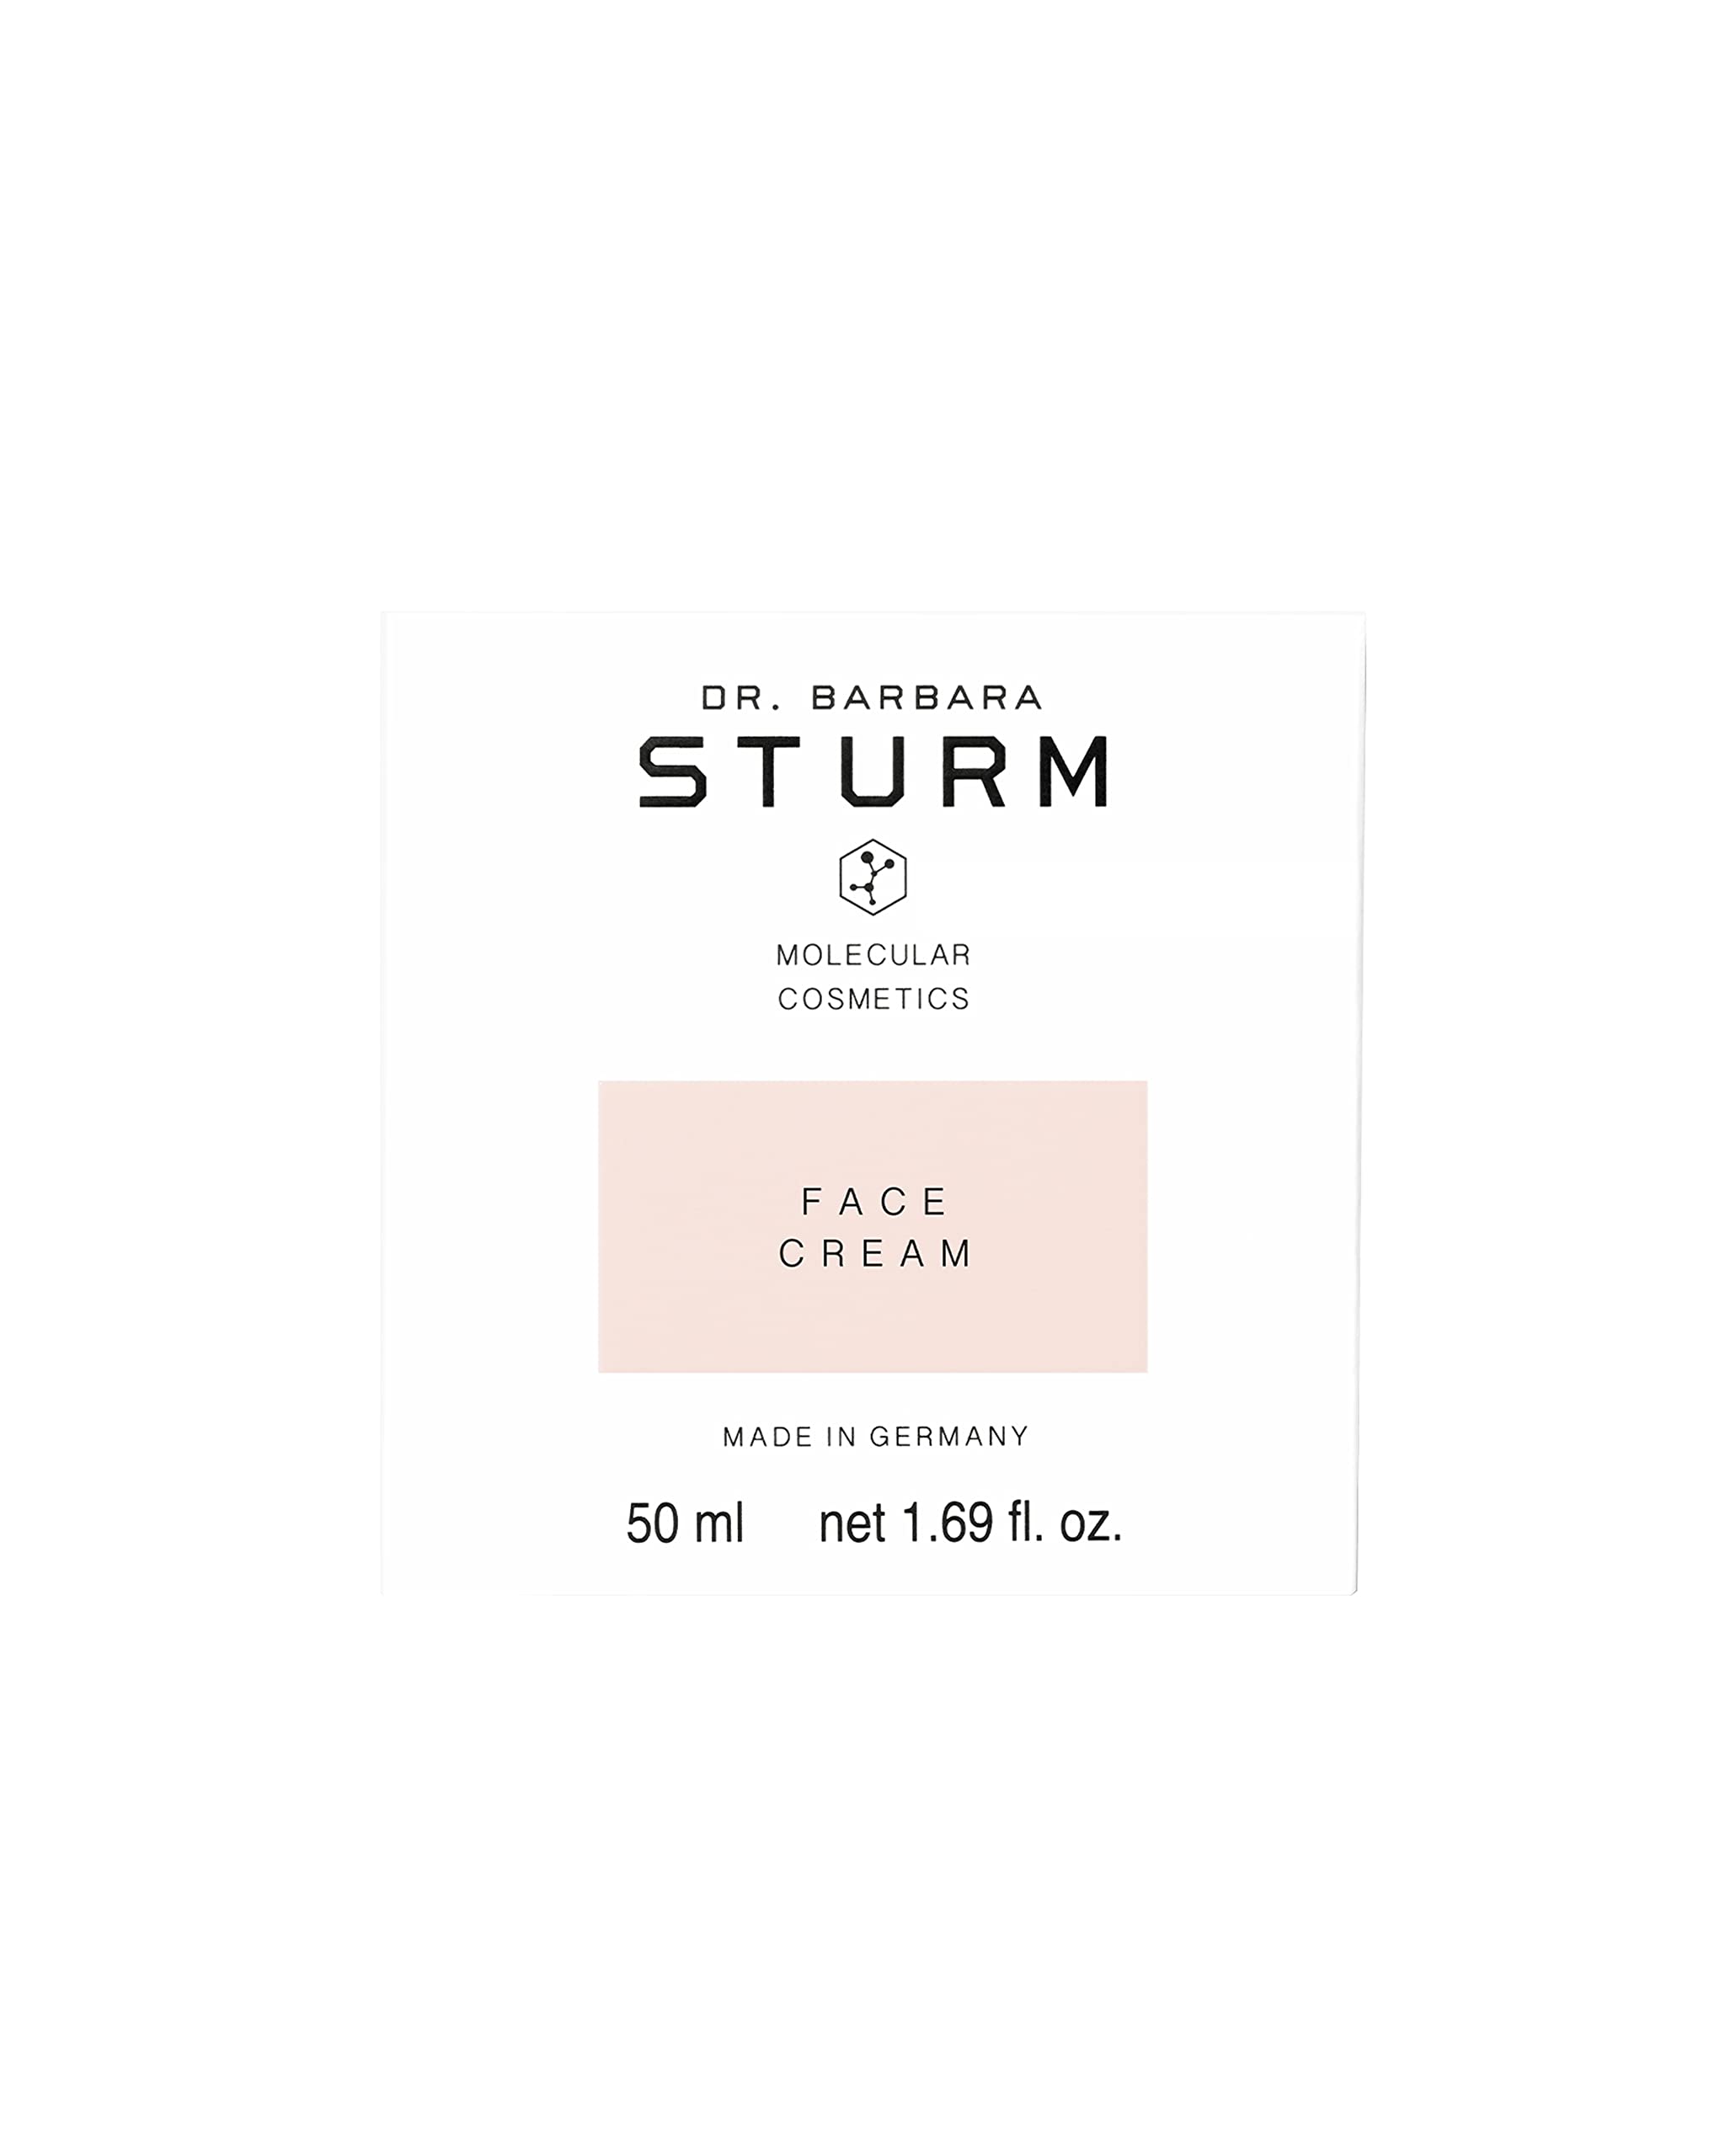 Dr. Barbara Sturm, Face Cream